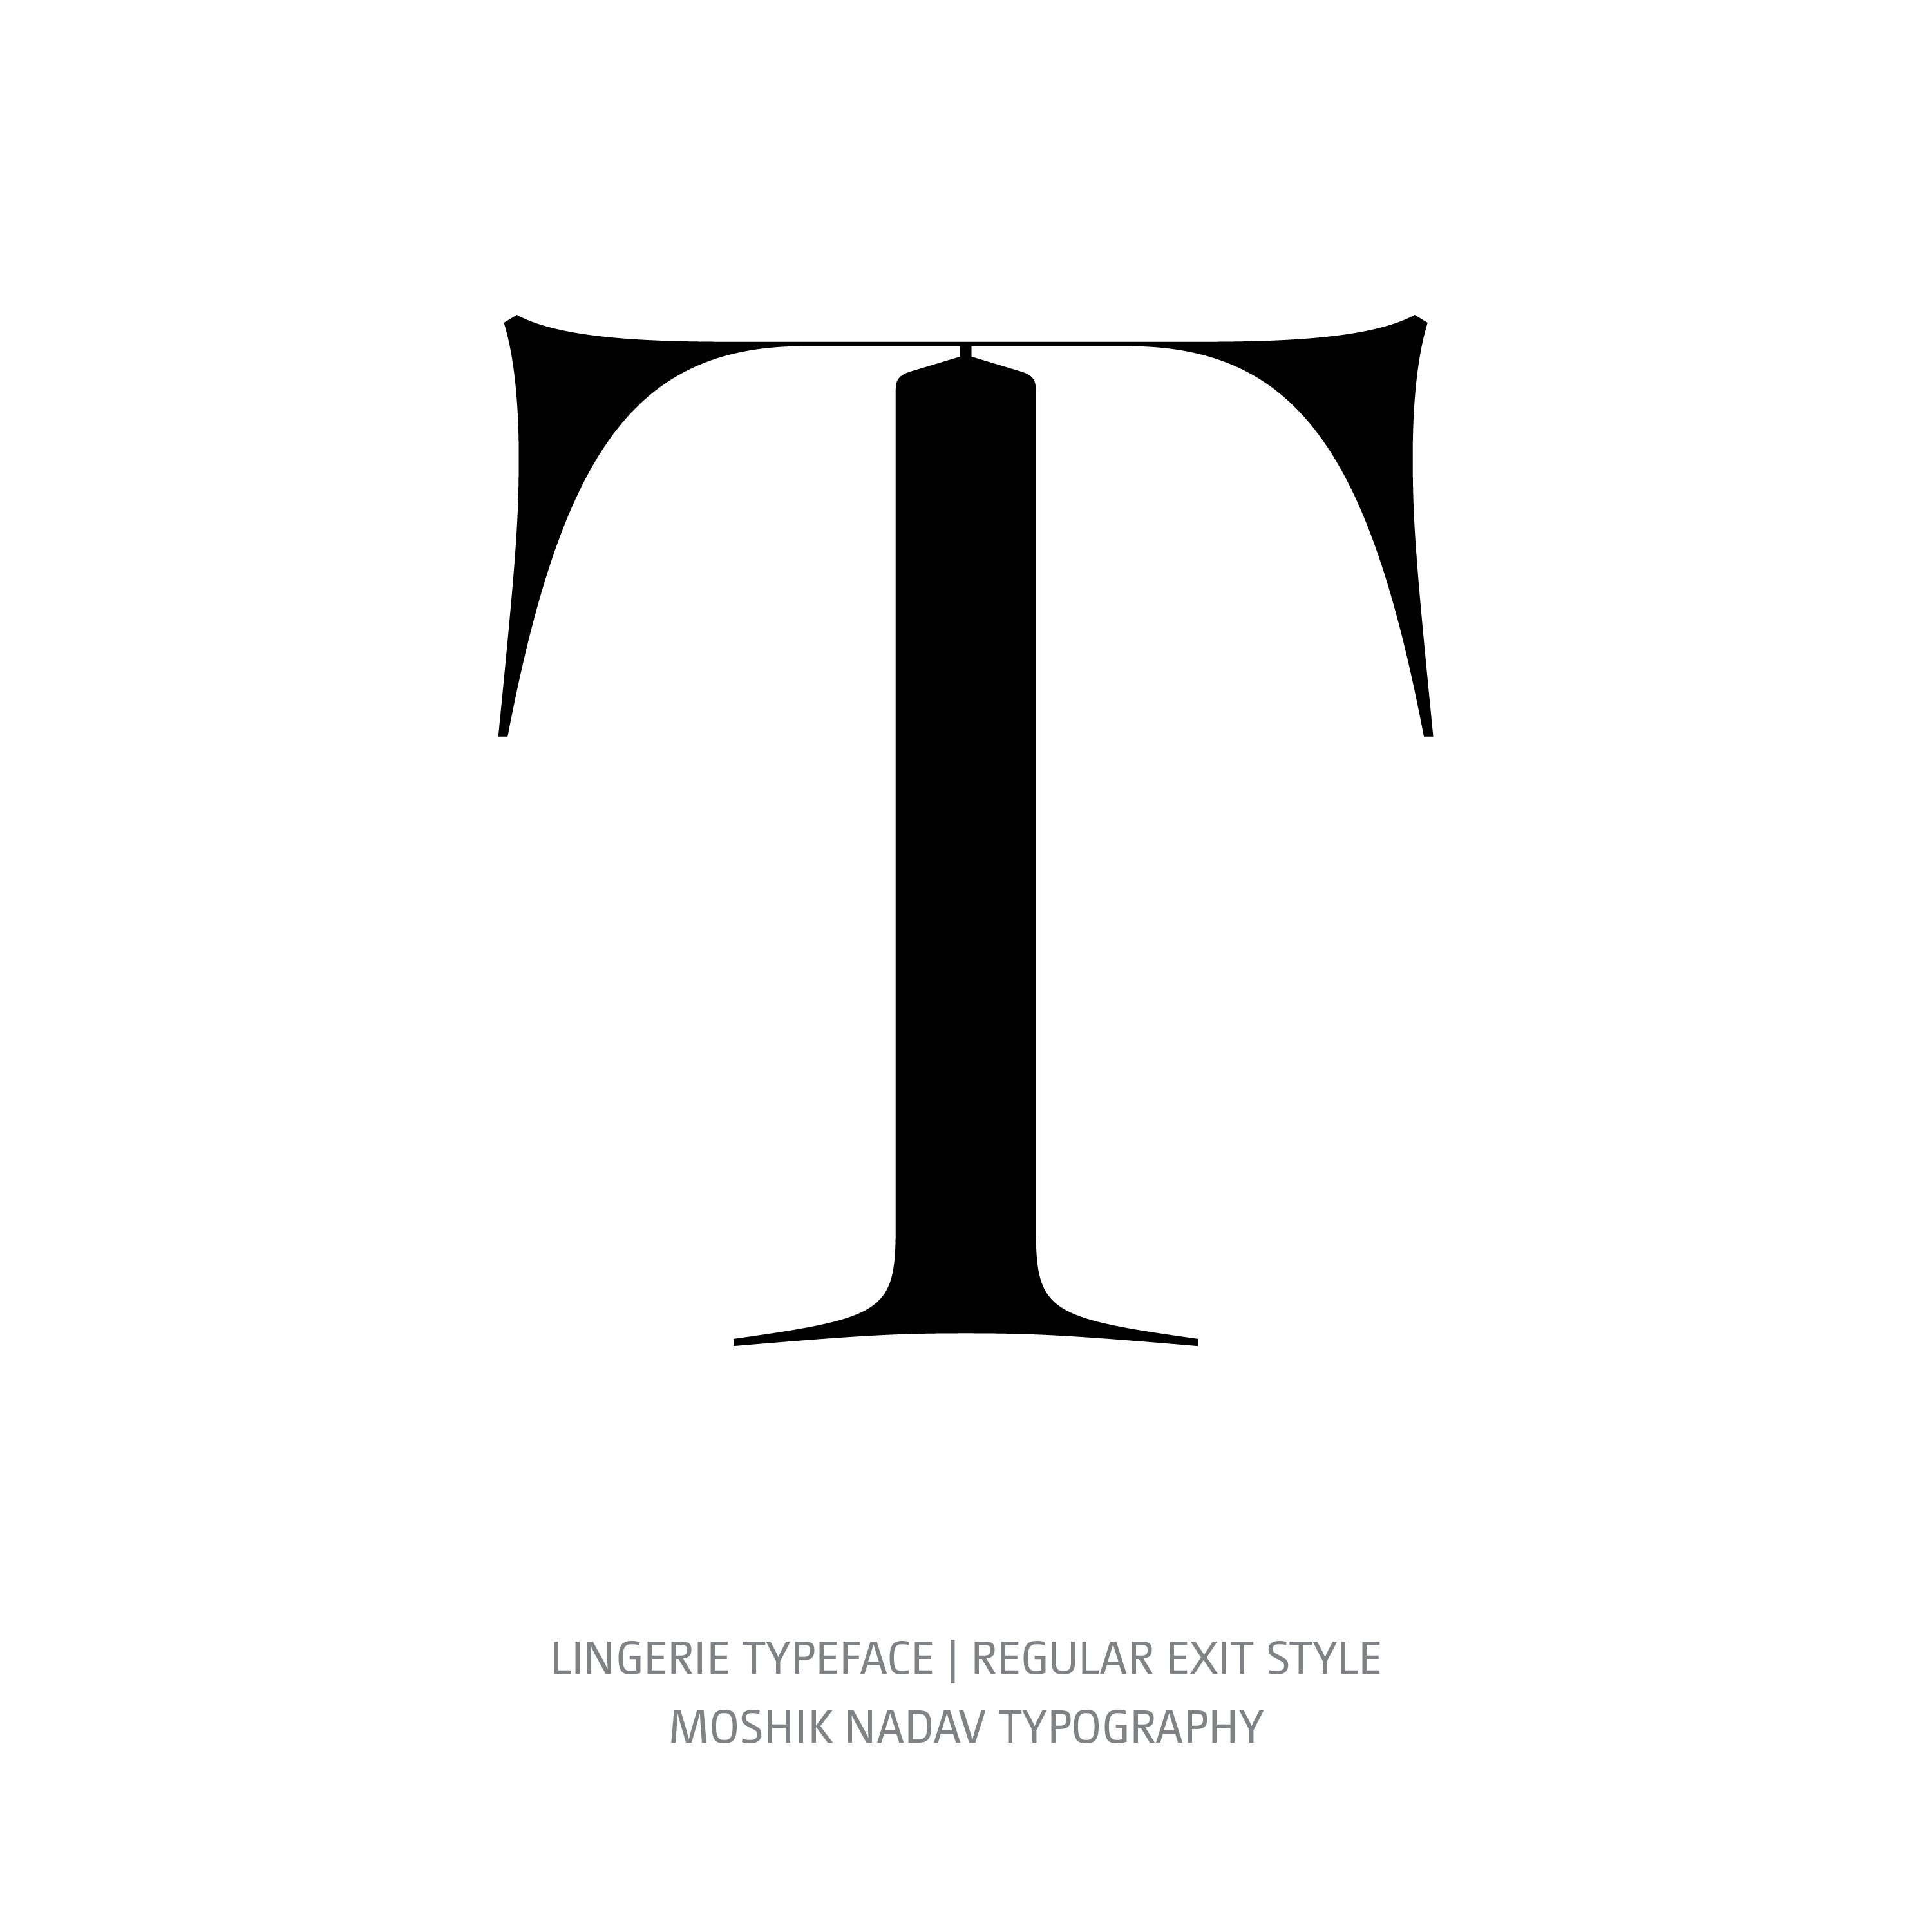 Lingerie Typeface Regular Exit T